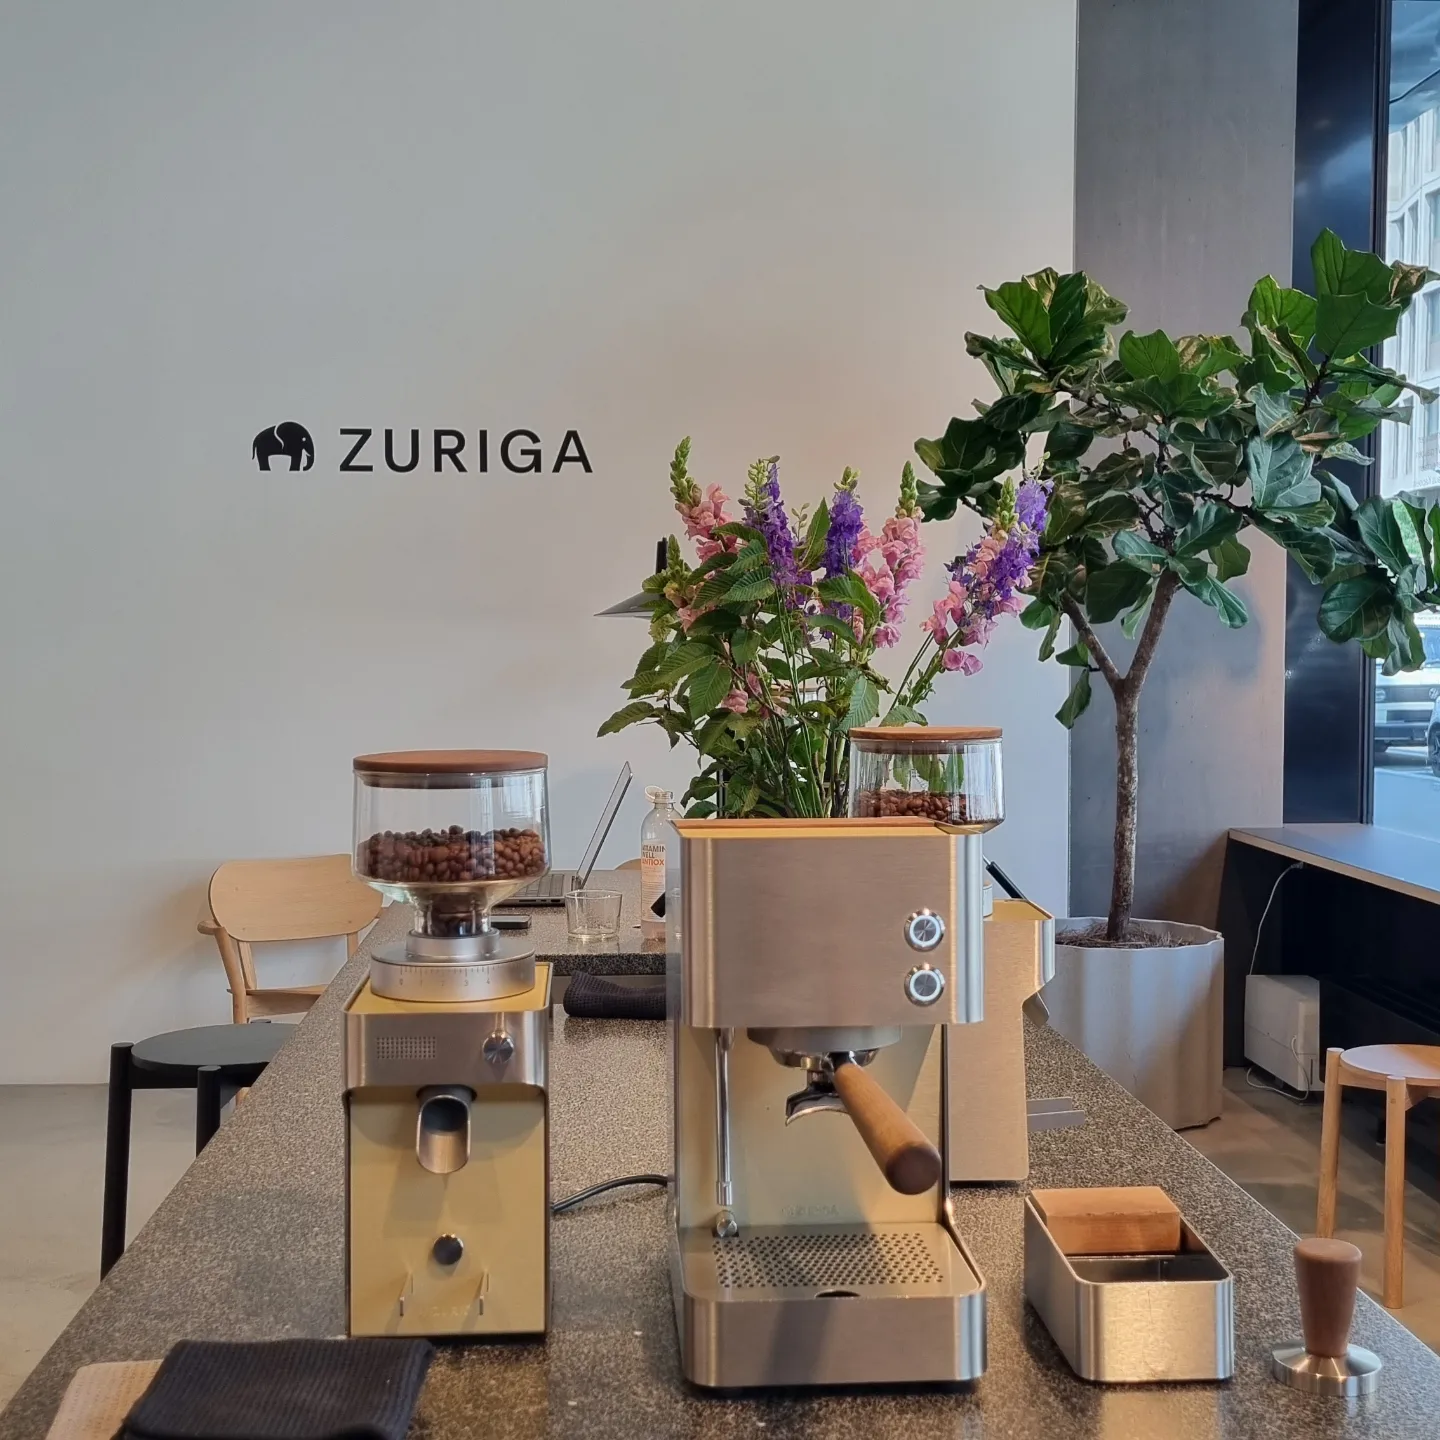 Zuriga-macchina-da-caffe-engineered, designed and manufactured in Switzerland